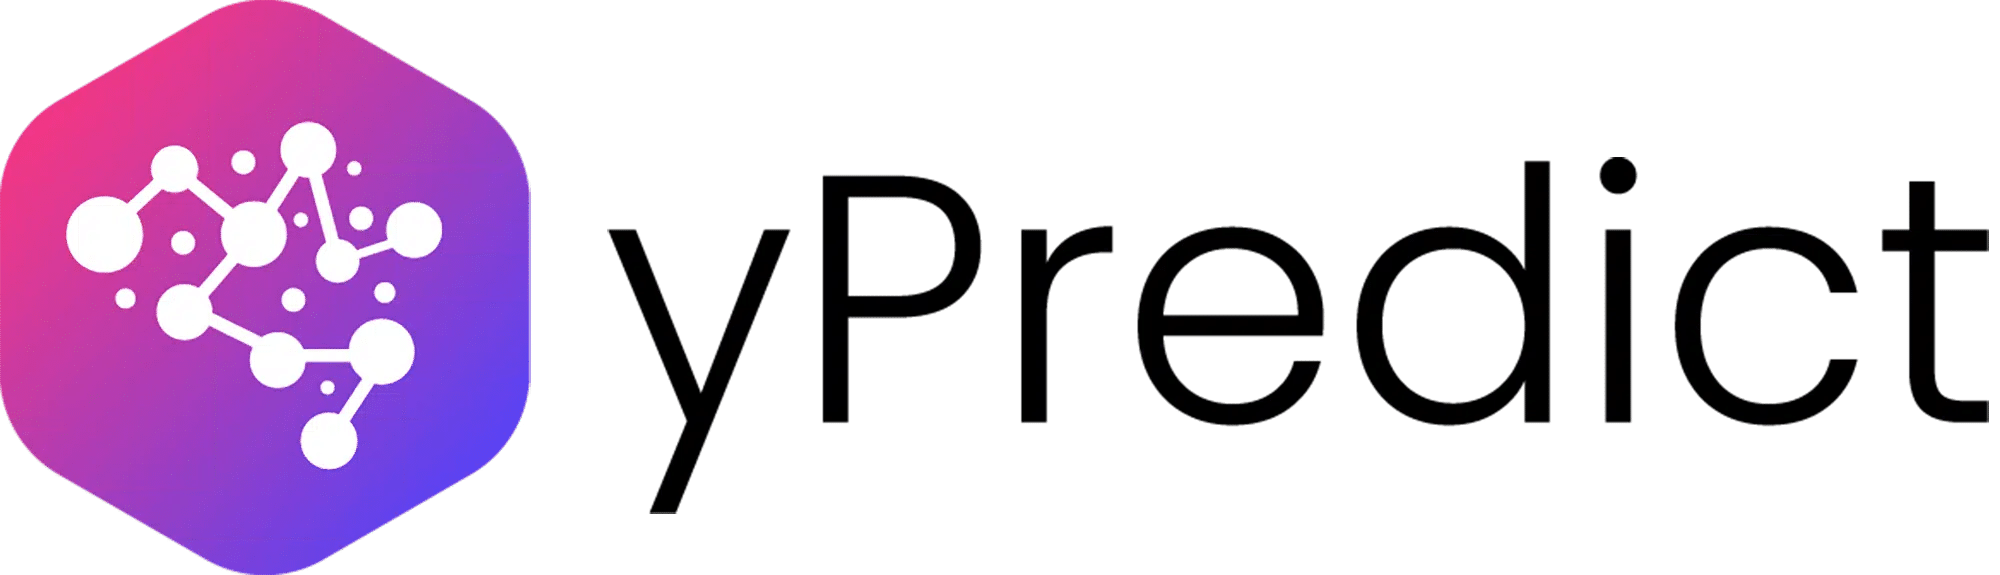 ypredict_logo